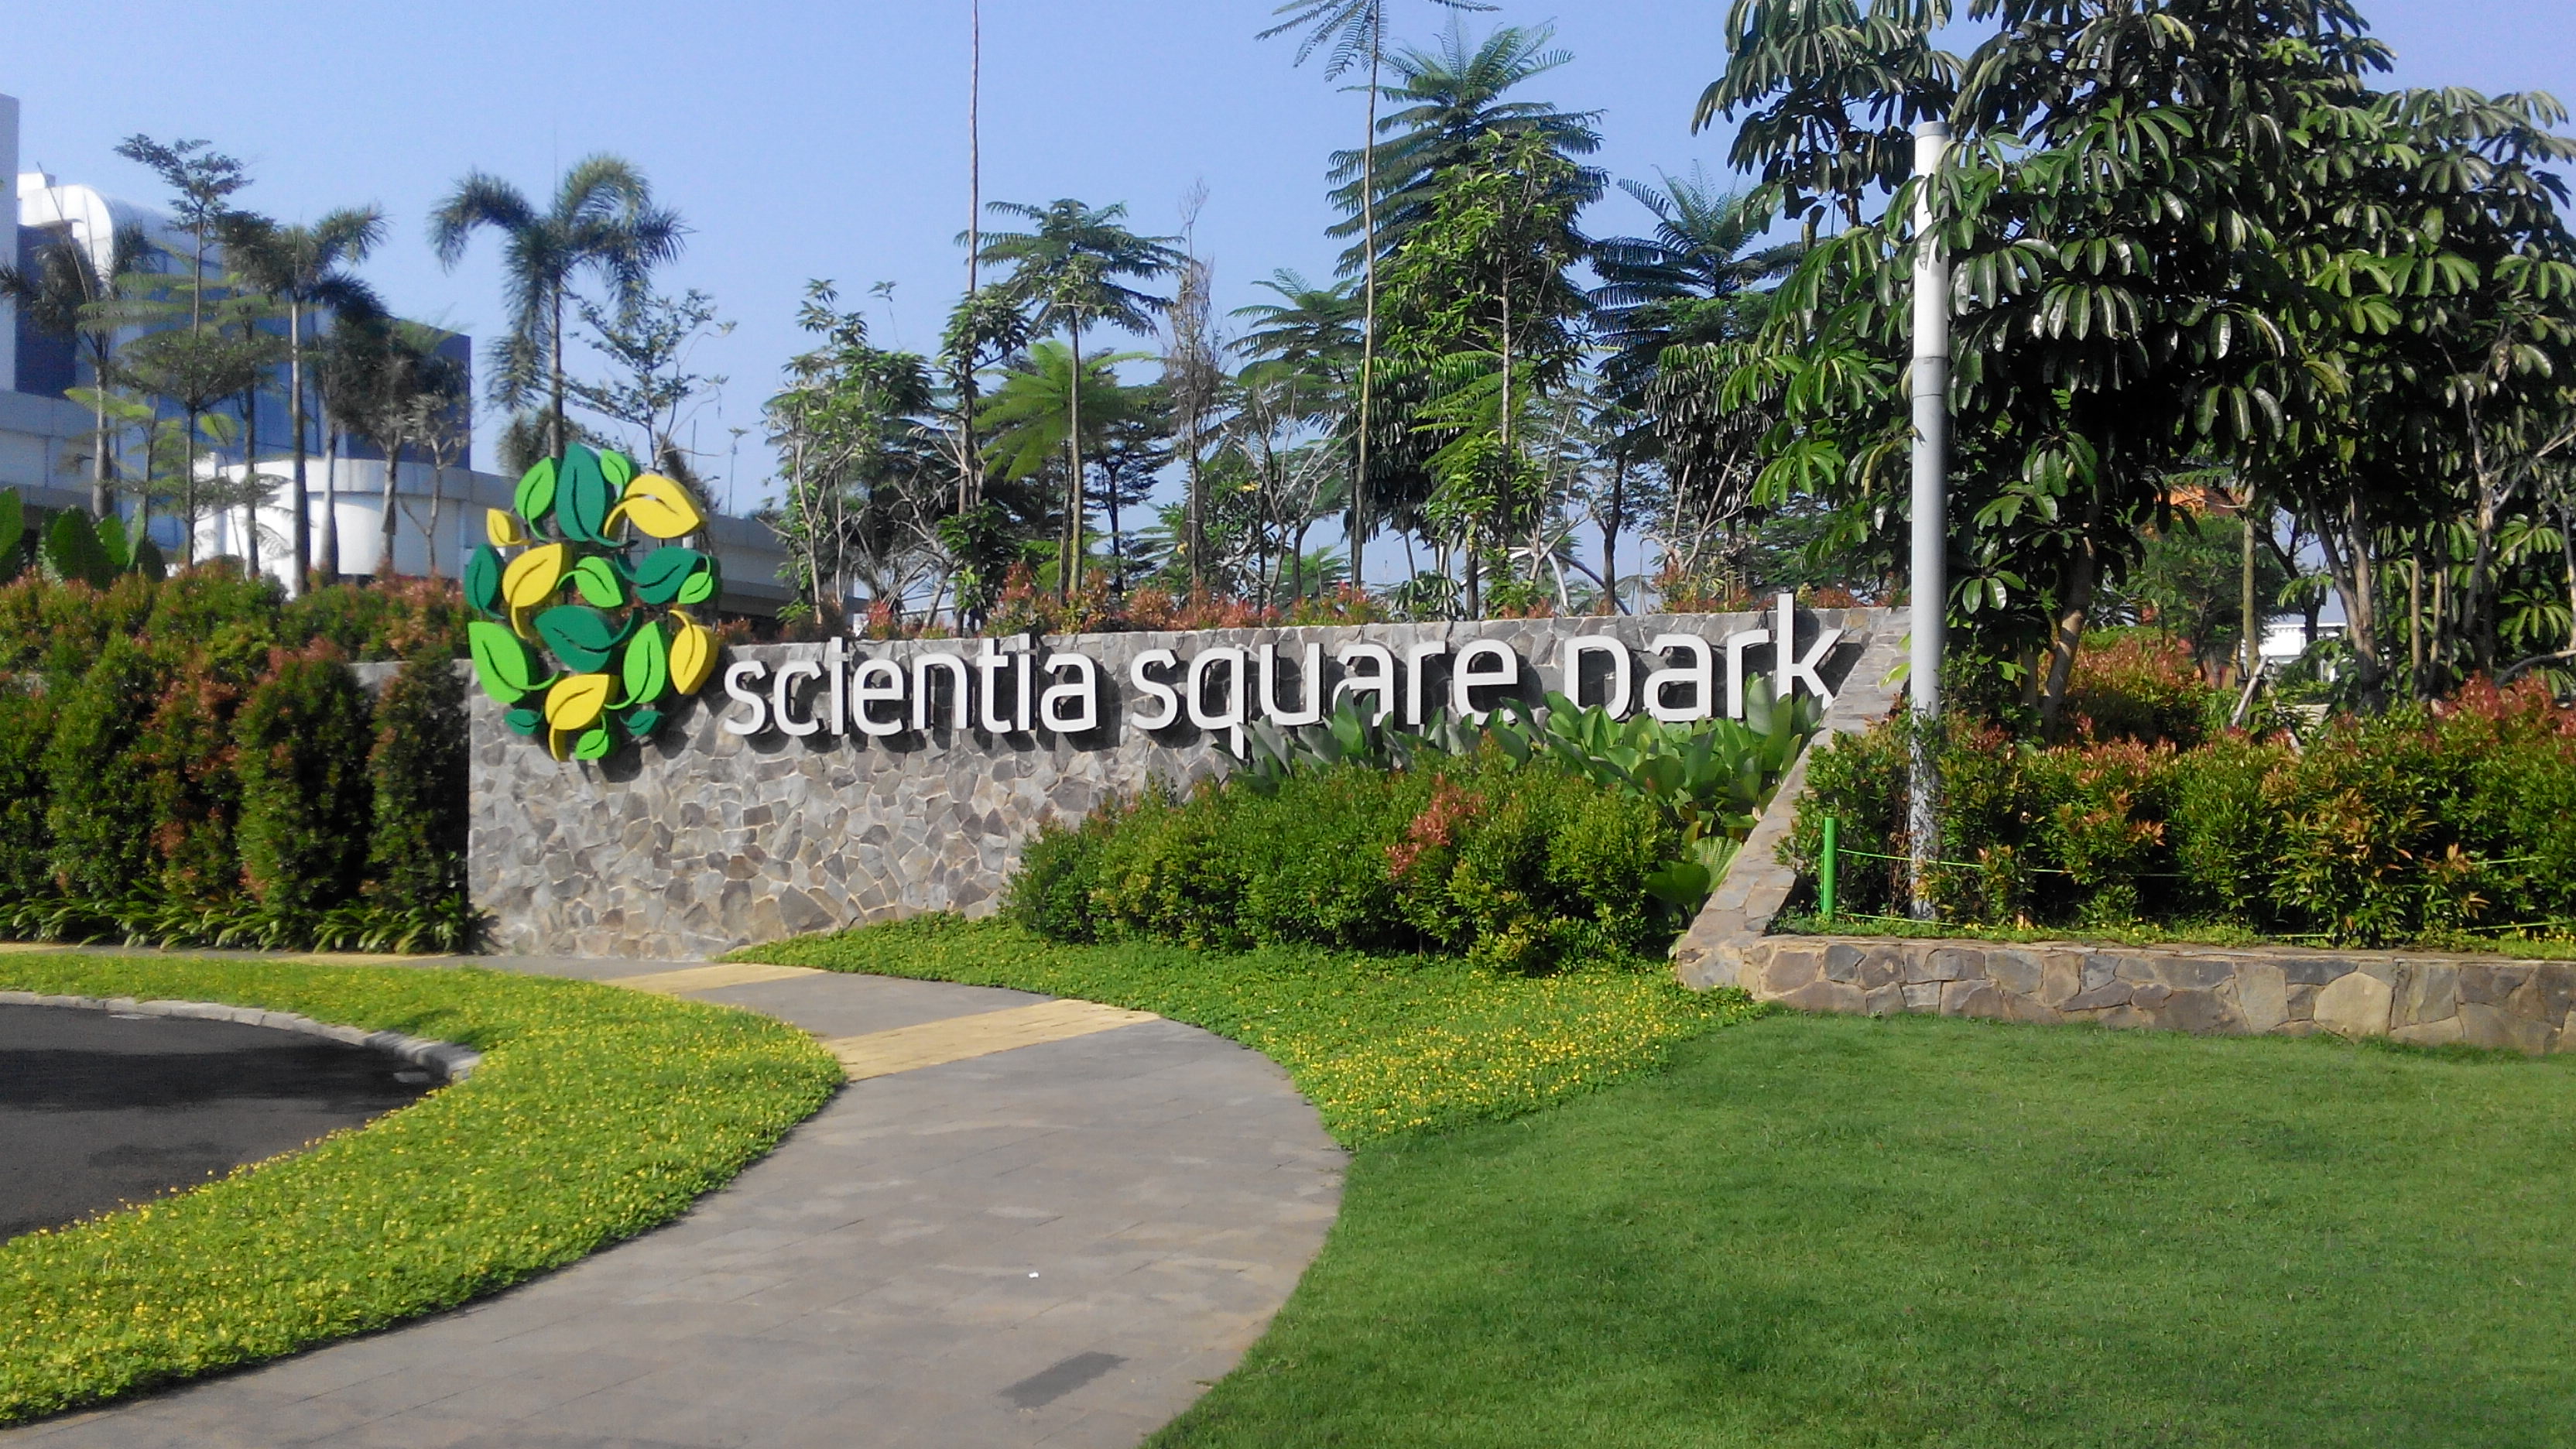 Scientia Square Park menawarkan pemadangan dengan rerumputan hijau hingga sawah